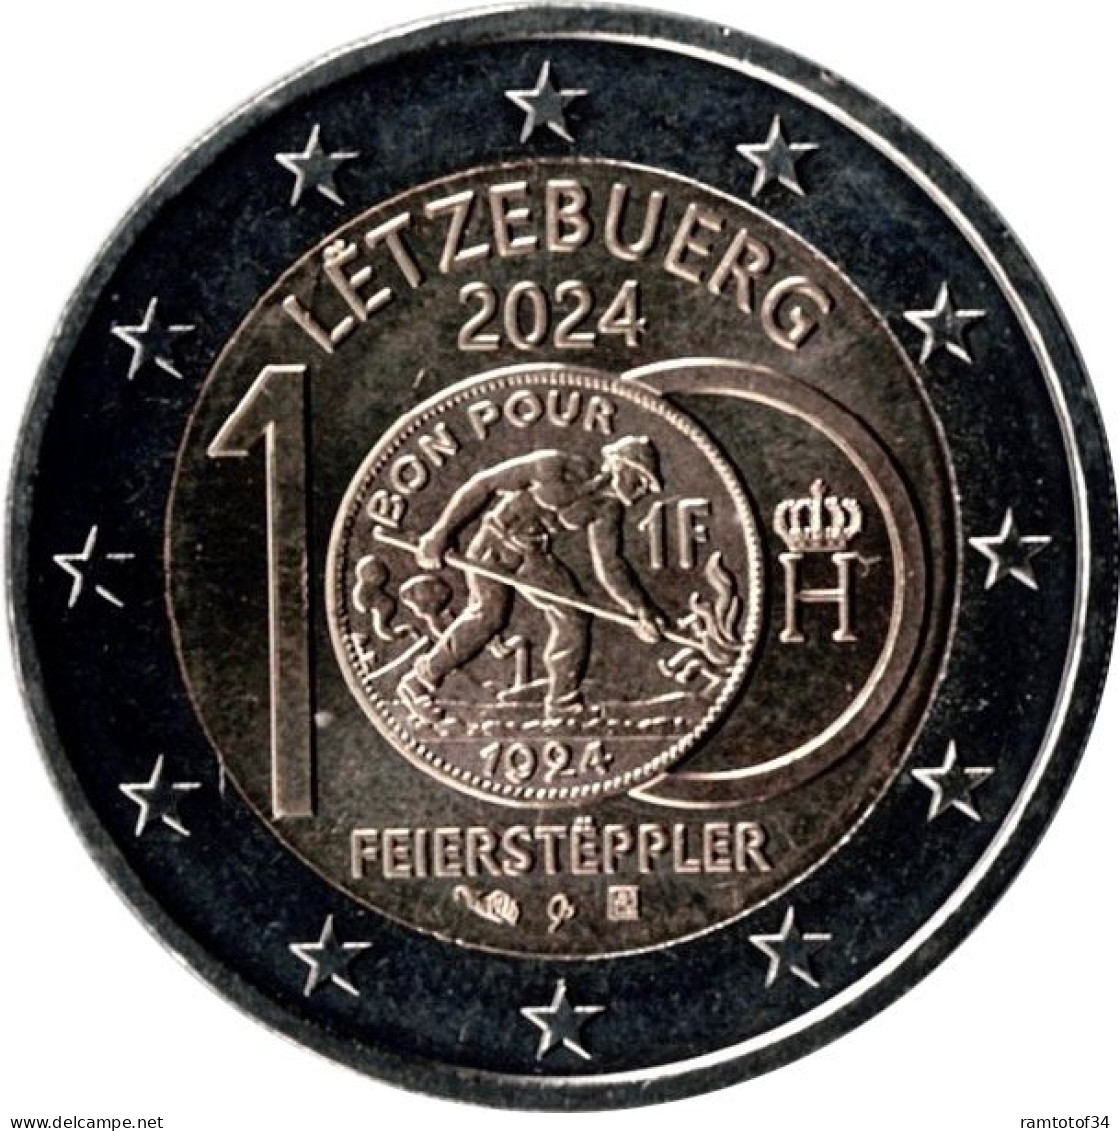 2024 LUXEMBOURG - 2 Euros Commémorative - Feiersteppler - Luxembourg